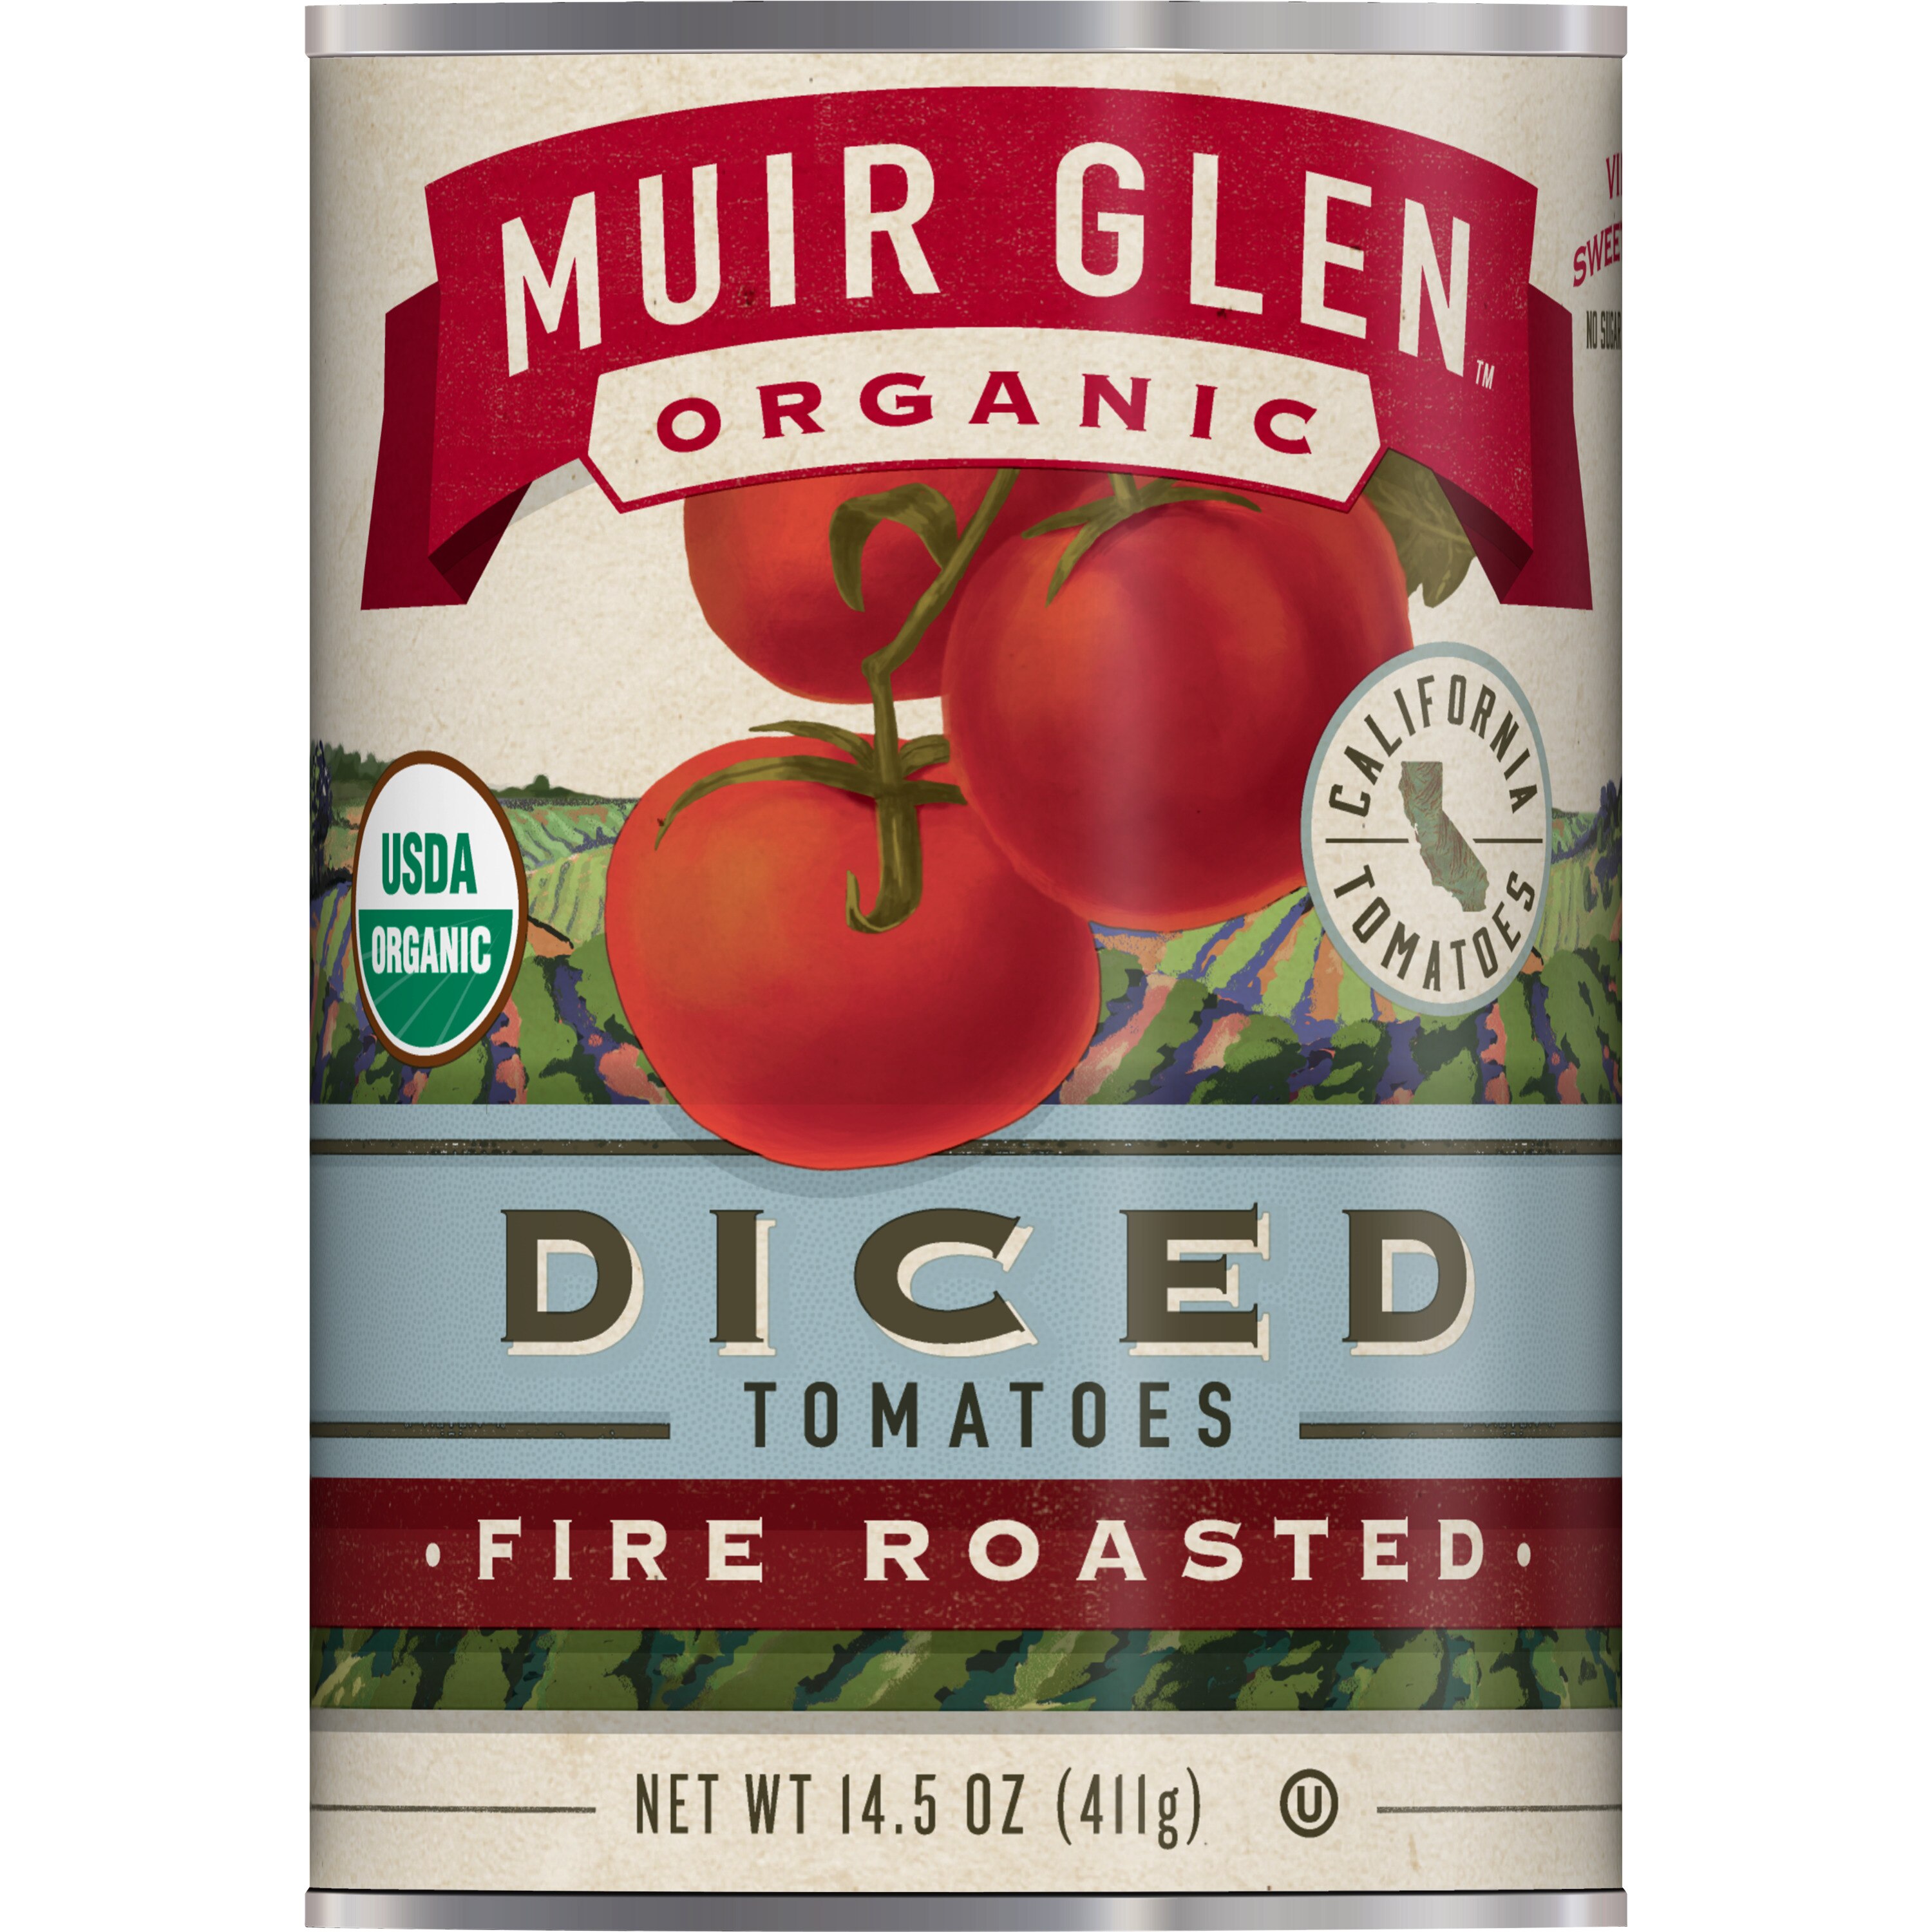 Muir Glen Organic Diced Fire Roasted Tomatoes, 14.5 OZ